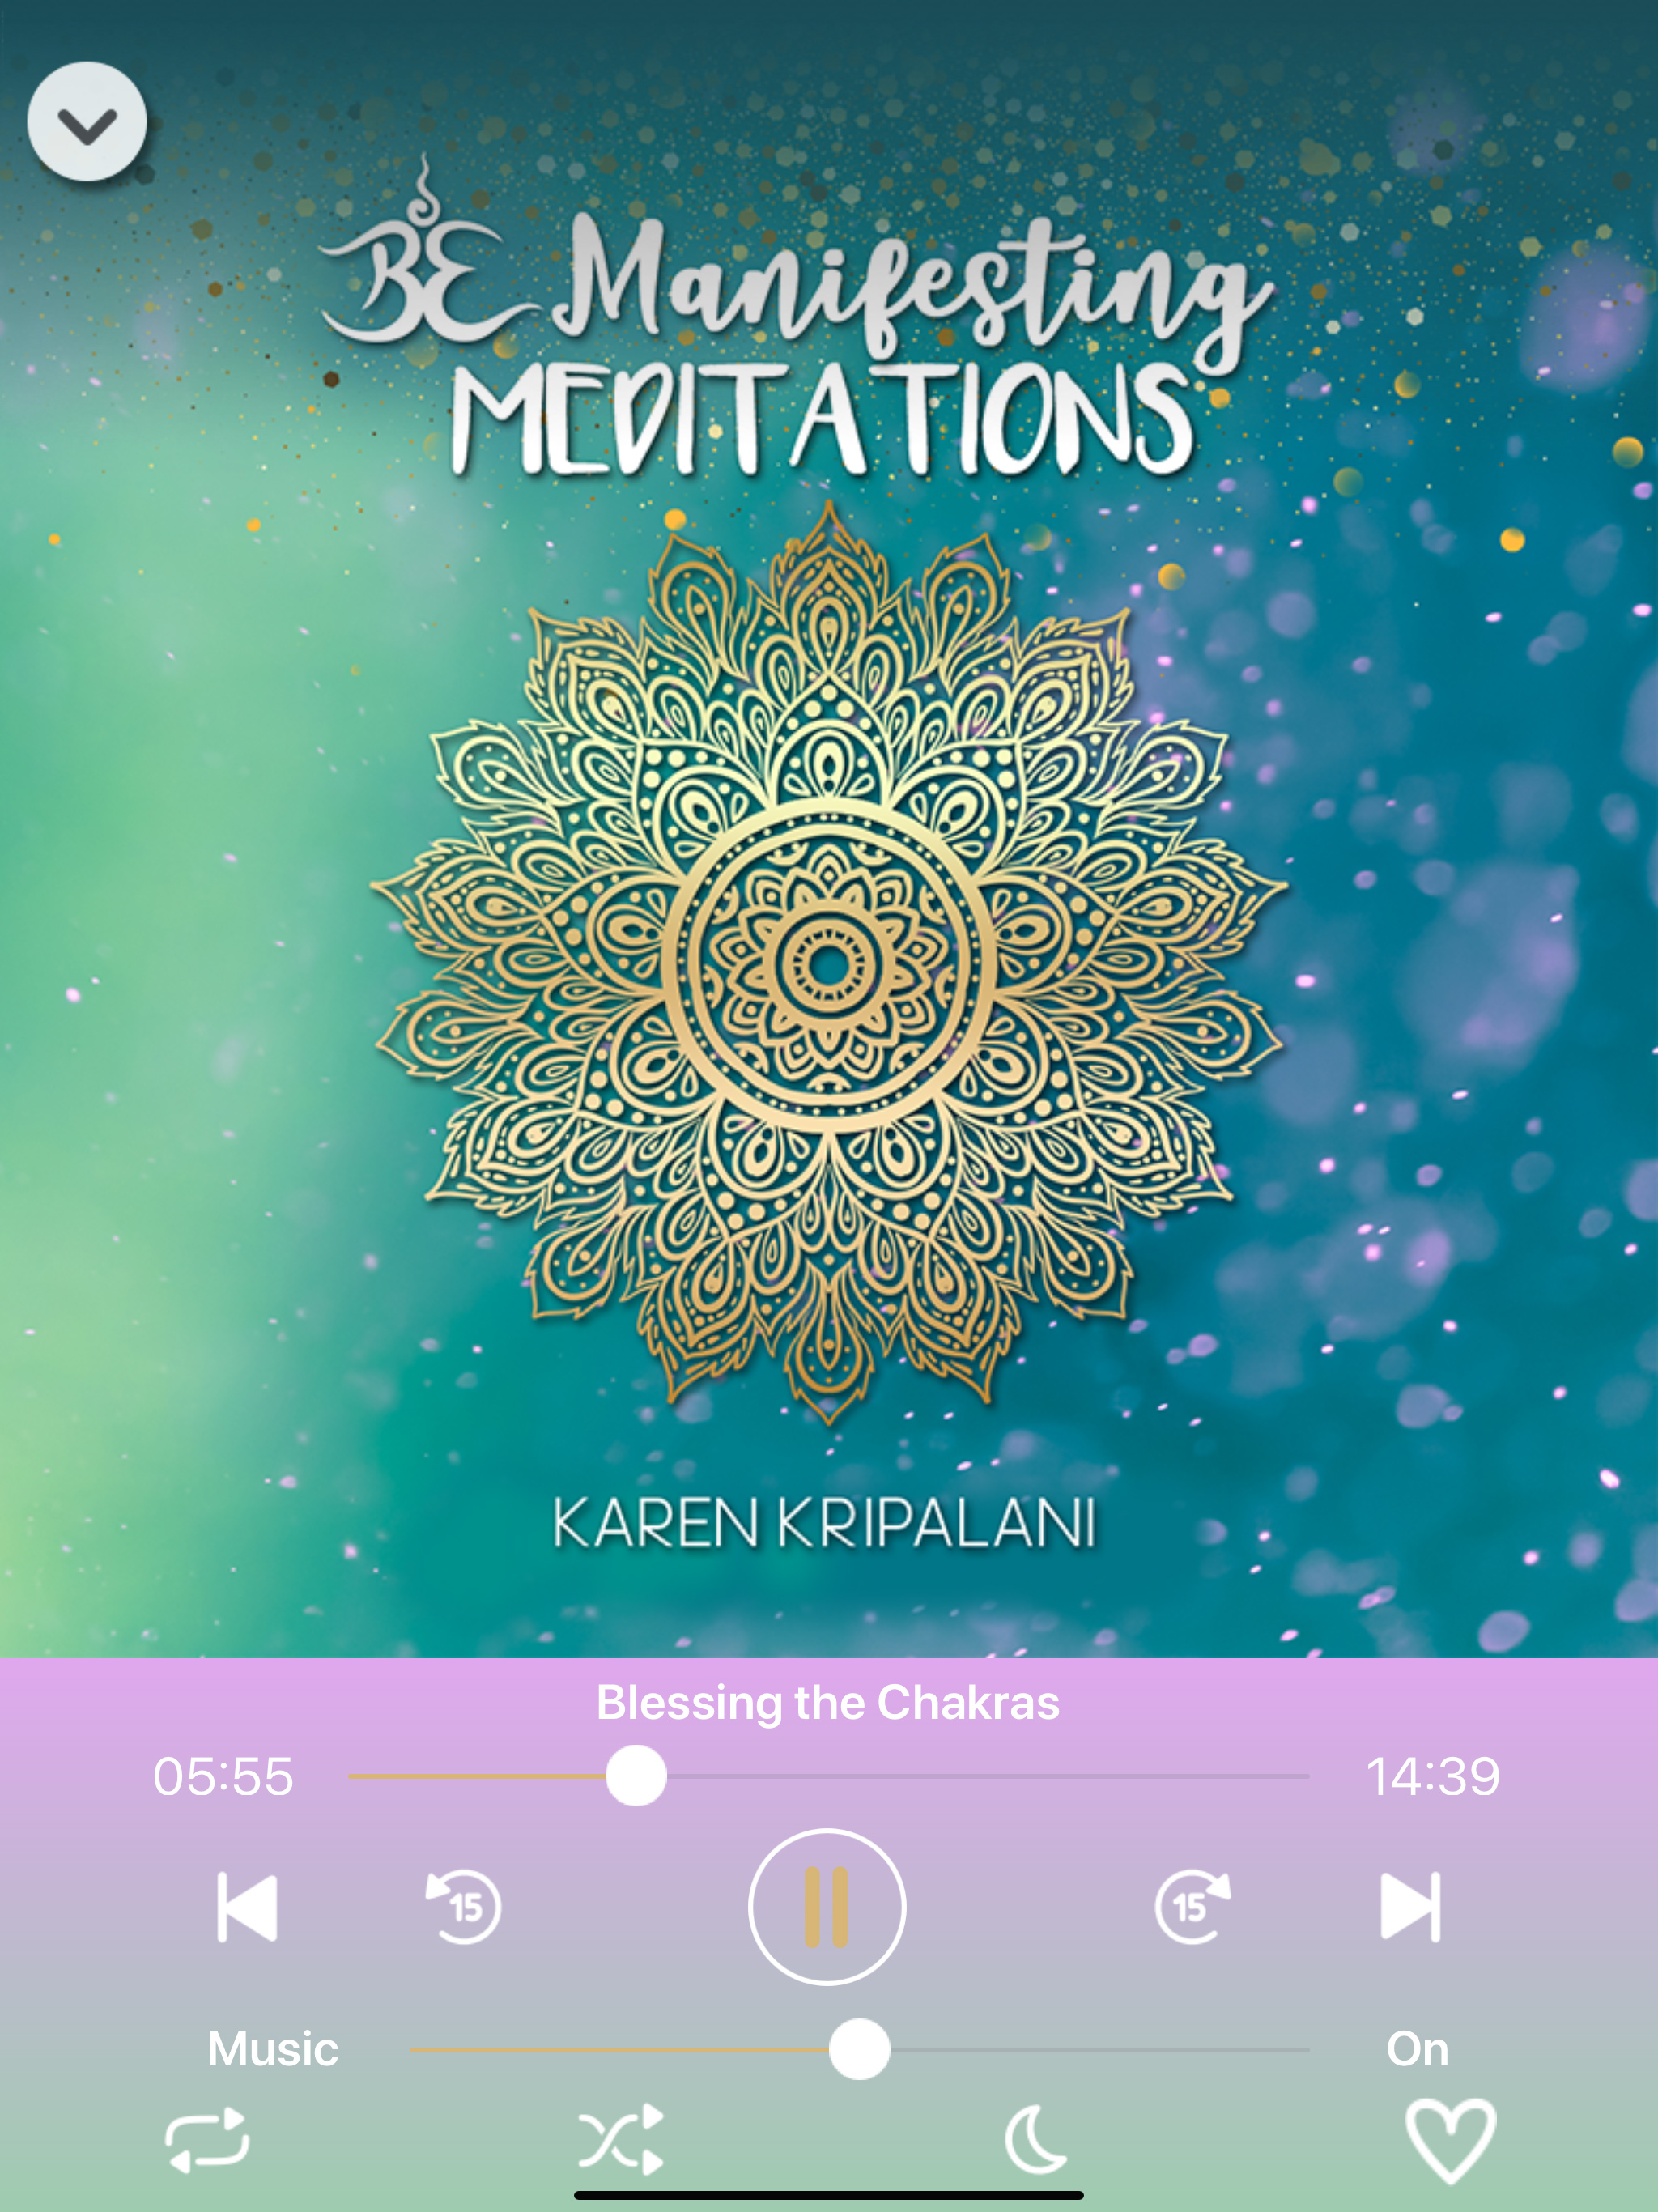 Manifesting Meditations by Karen Kripalani